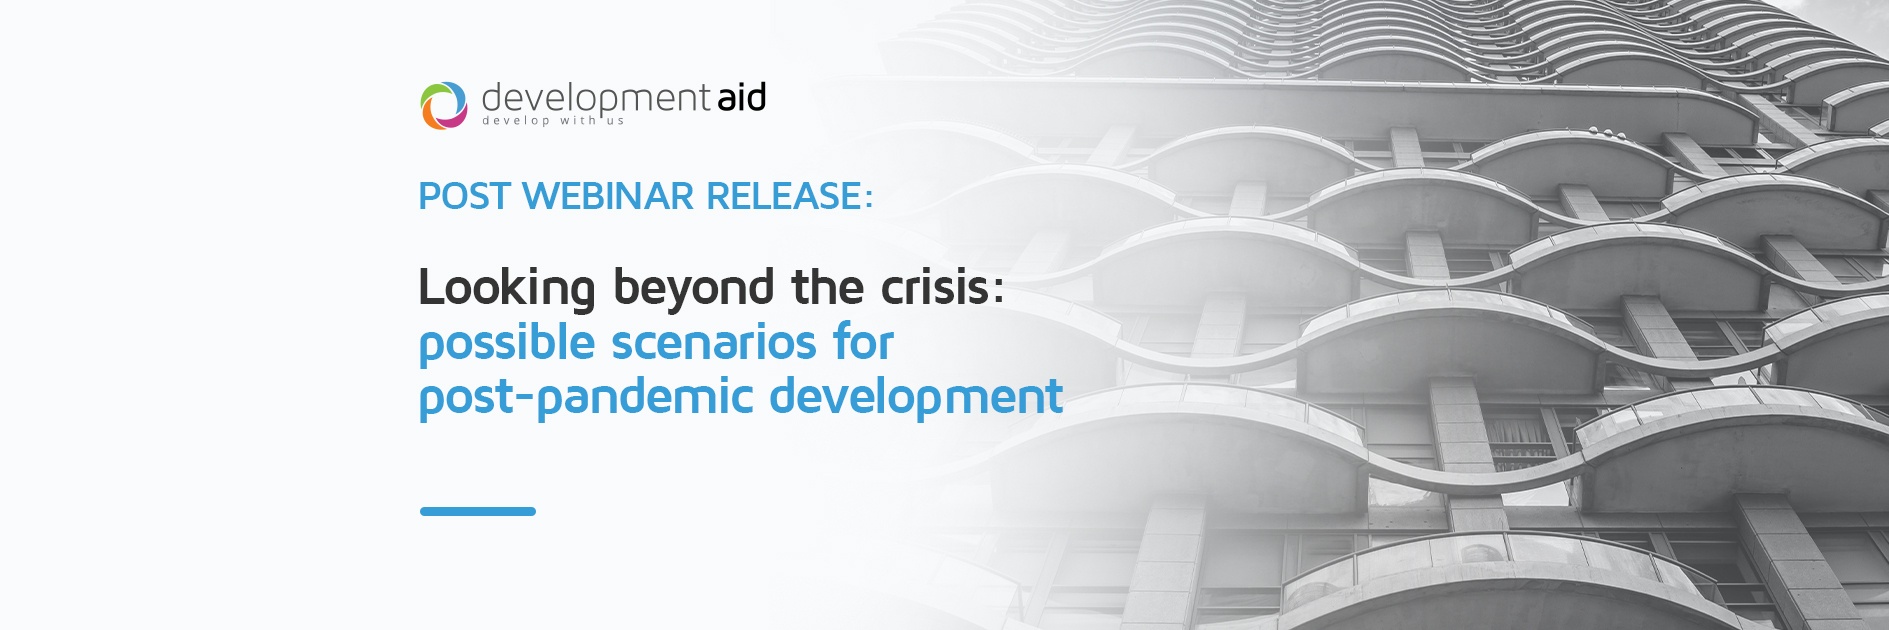 Post Webinar Release | Looking beyond the crisis: possible scenarios for post-pandemic development